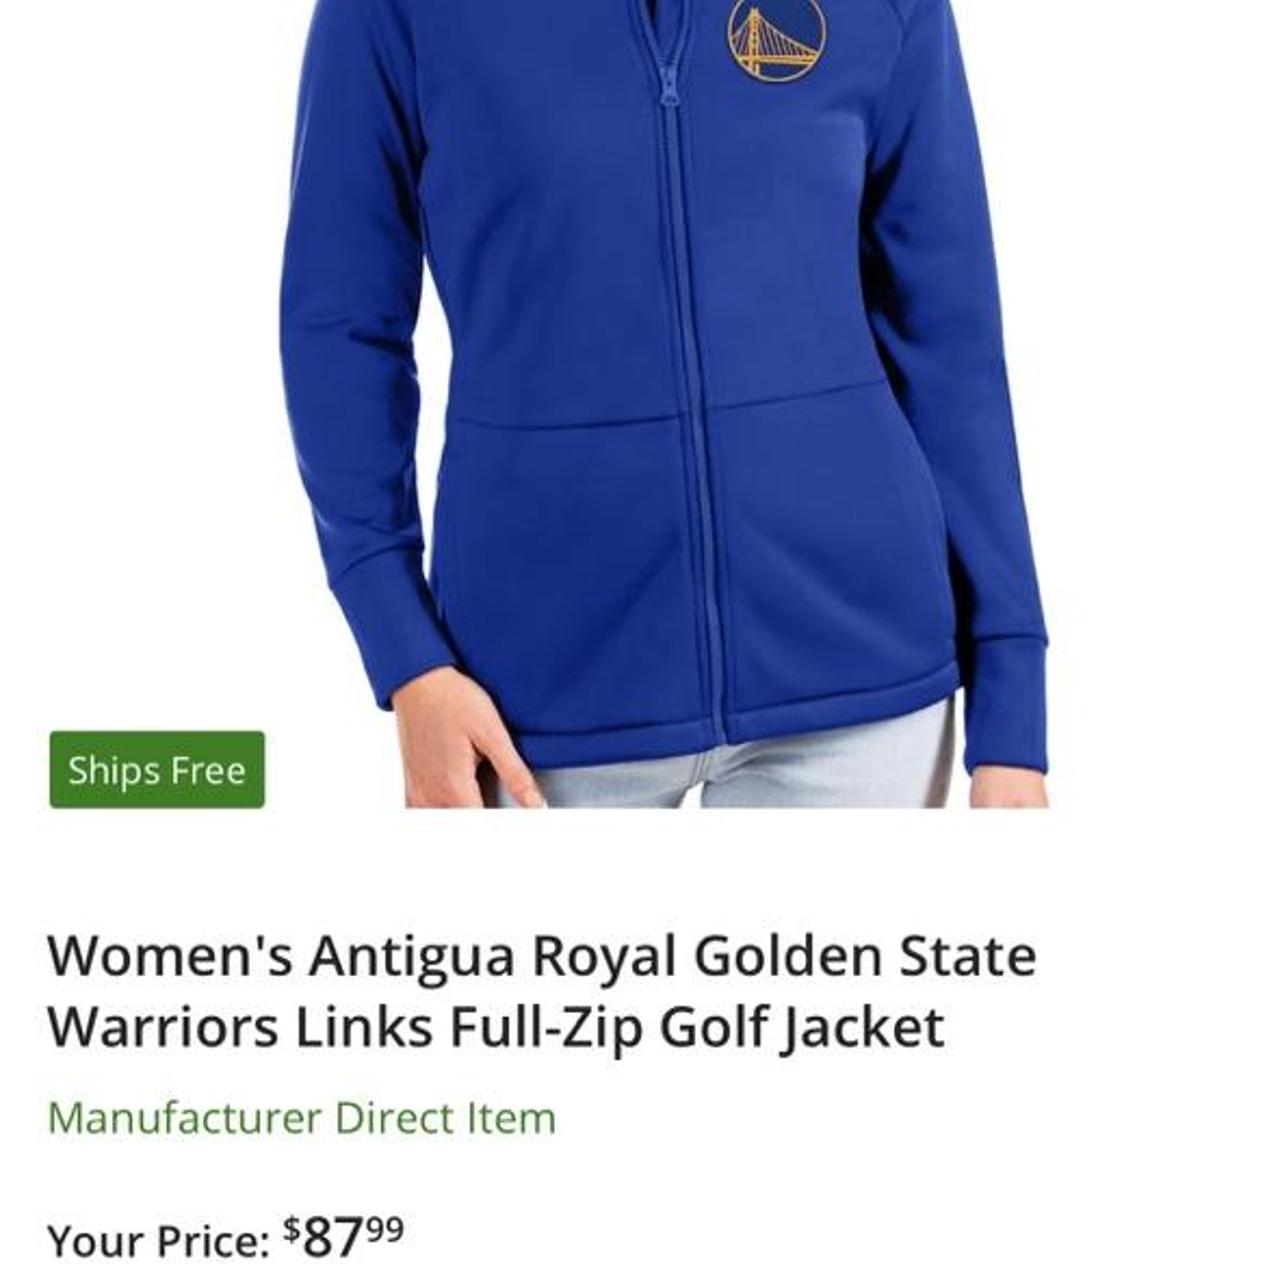 Women's Antigua Royal Golden State Warriors Links Full-Zip Golf Jacket